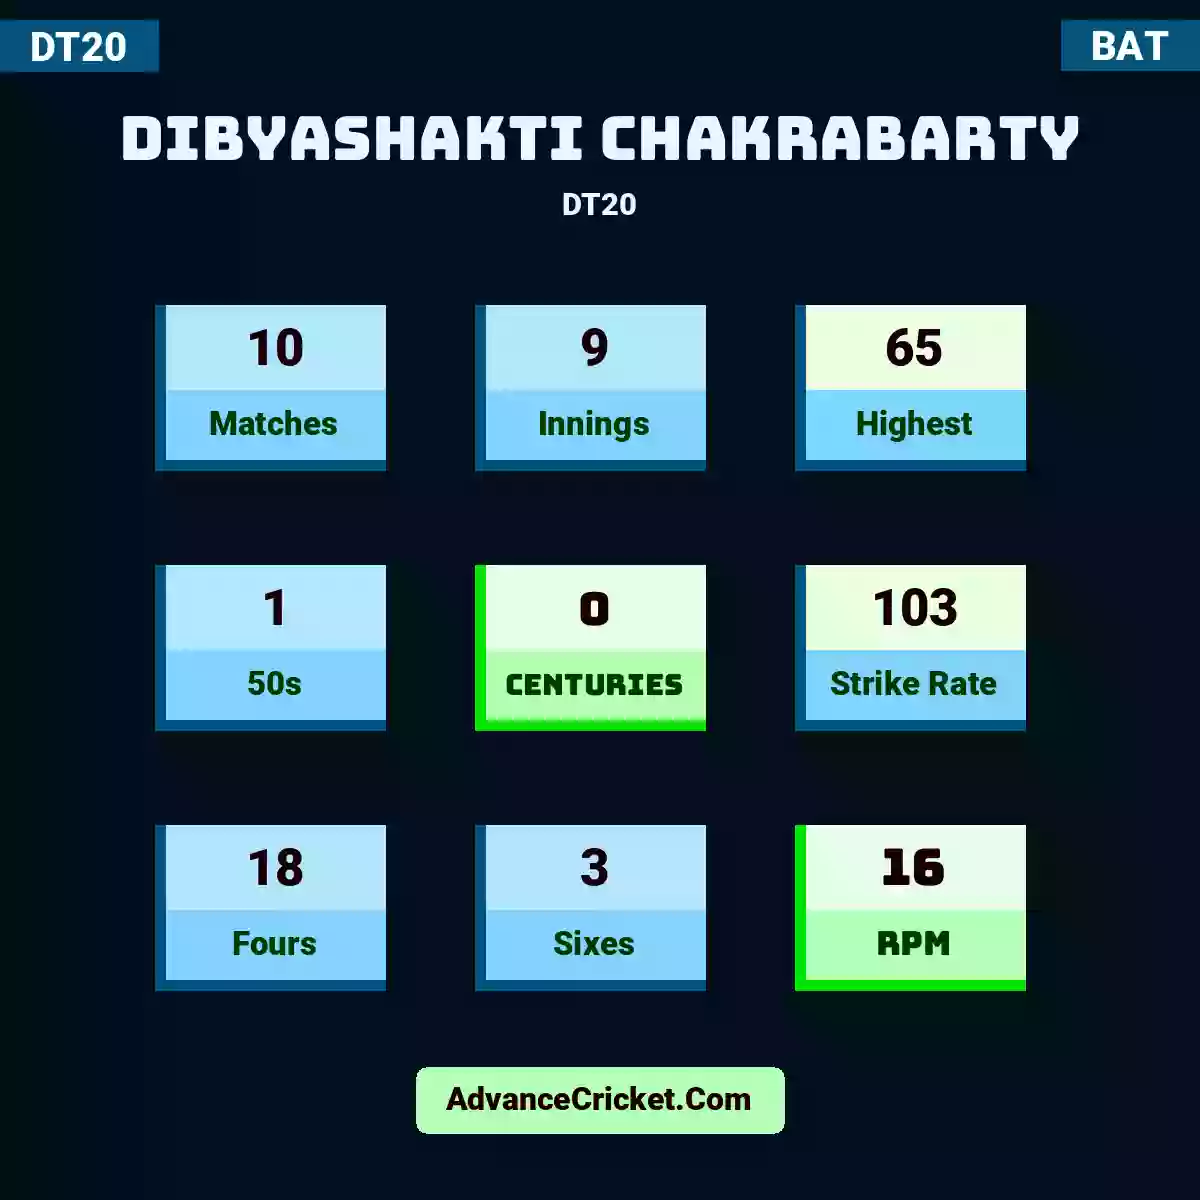 Dibyashakti Chakrabarty DT20 , Dibyashakti Chakrabarty played 10 matches, scored 65 runs as highest, 1 half-centuries, and 0 centuries, with a strike rate of 103. D.Chakrabarty hit 18 fours and 3 sixes, with an RPM of 16.